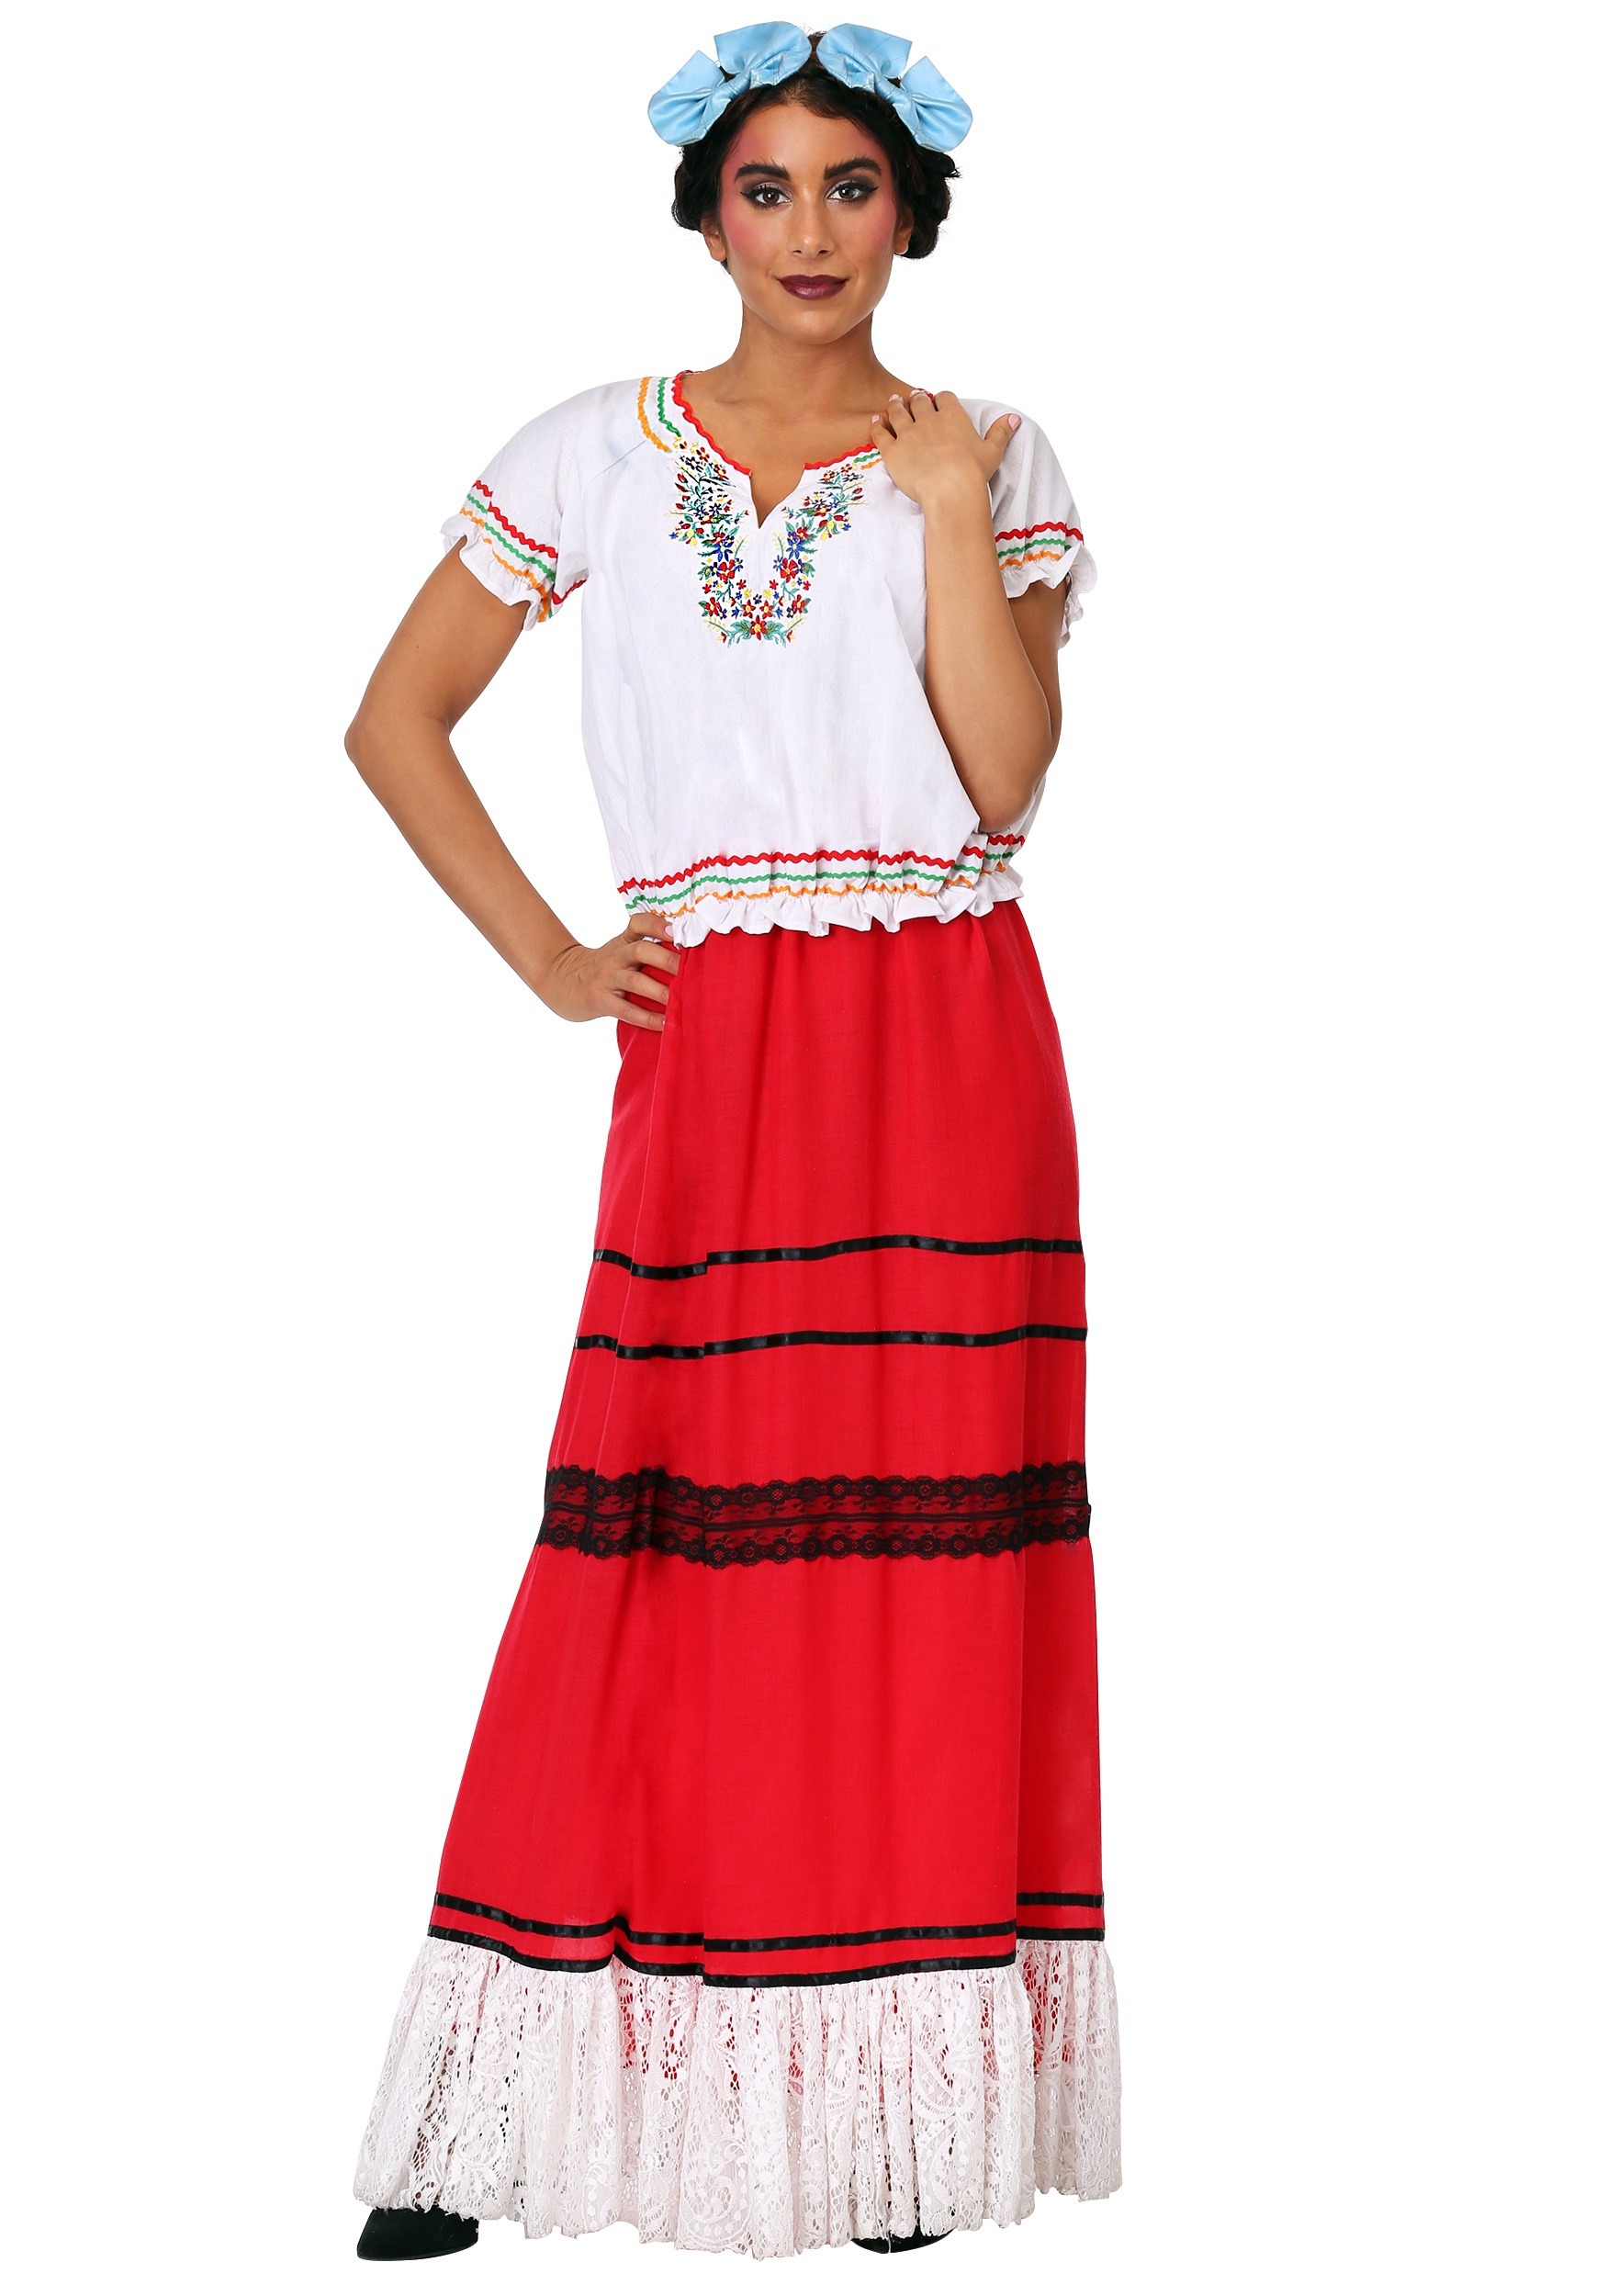 Red Frida Kahlo Women's Plus Size Costume